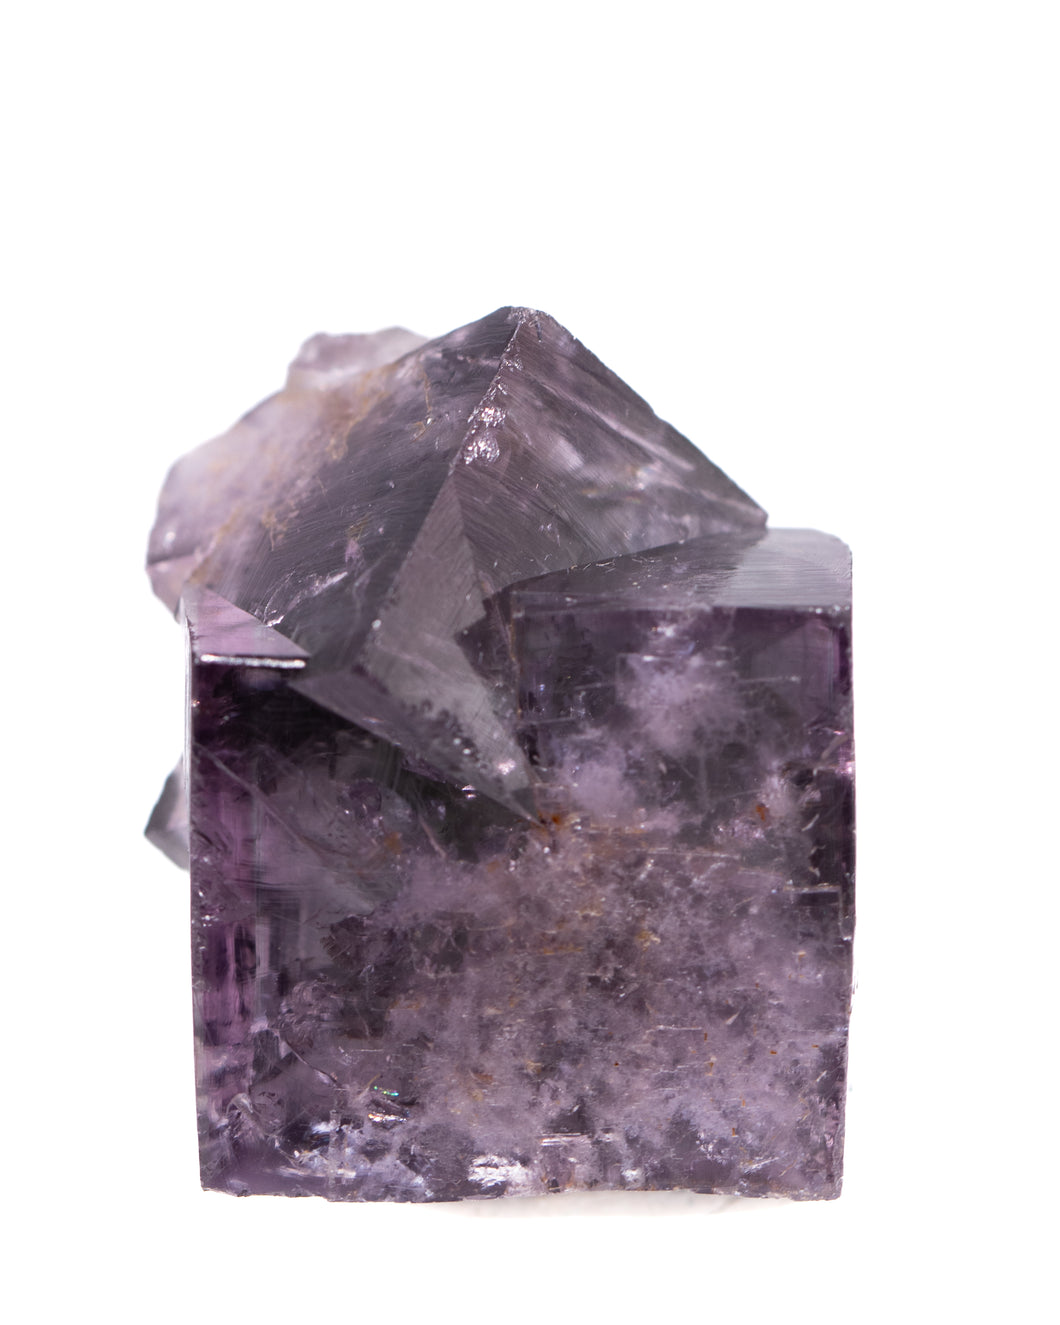 Fluorite - Purple Rain Pocket, Lady Annabella Mine, Durham, England, UK